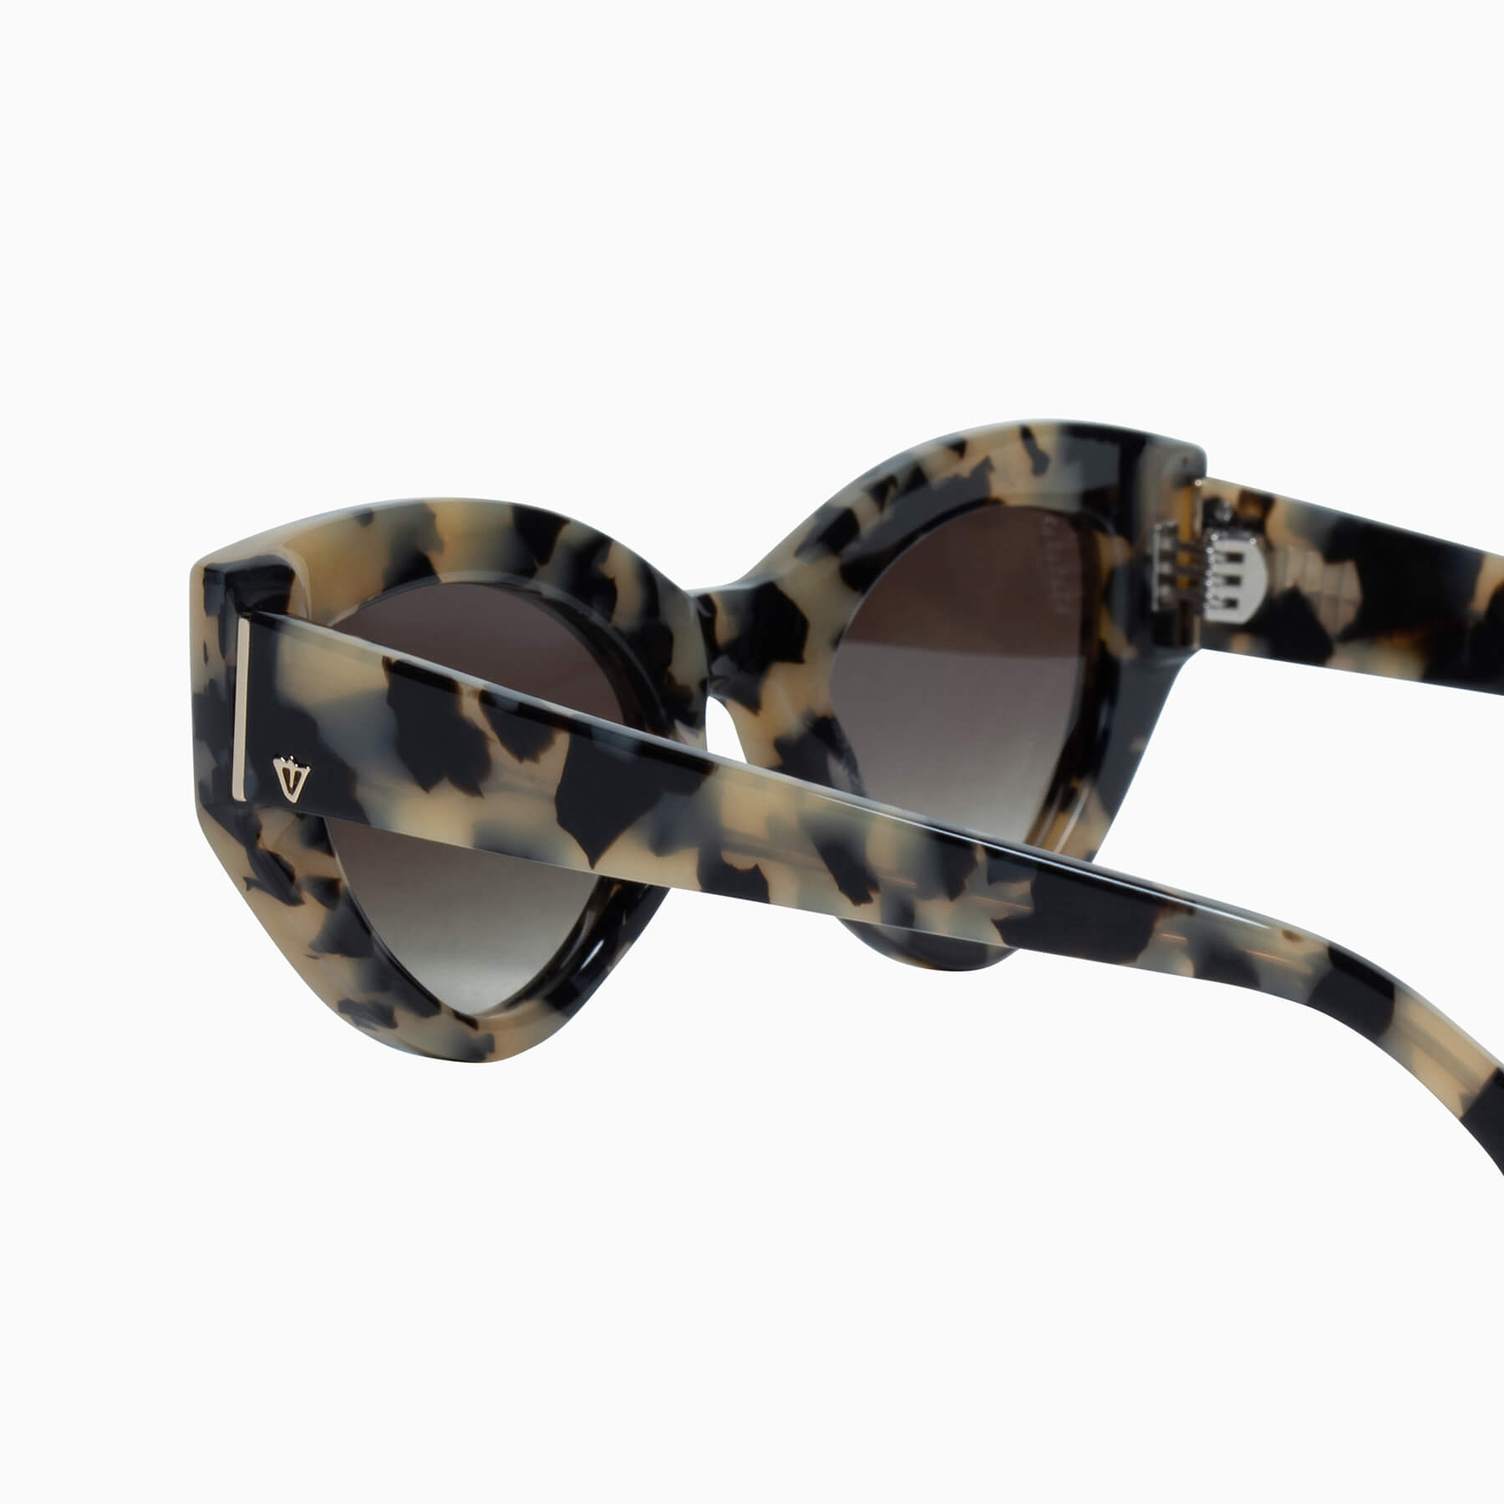 Bones | Sunglasses - Fawn Tort w. Gold Metal Trim / Black Gradient Lens | Sunglasses